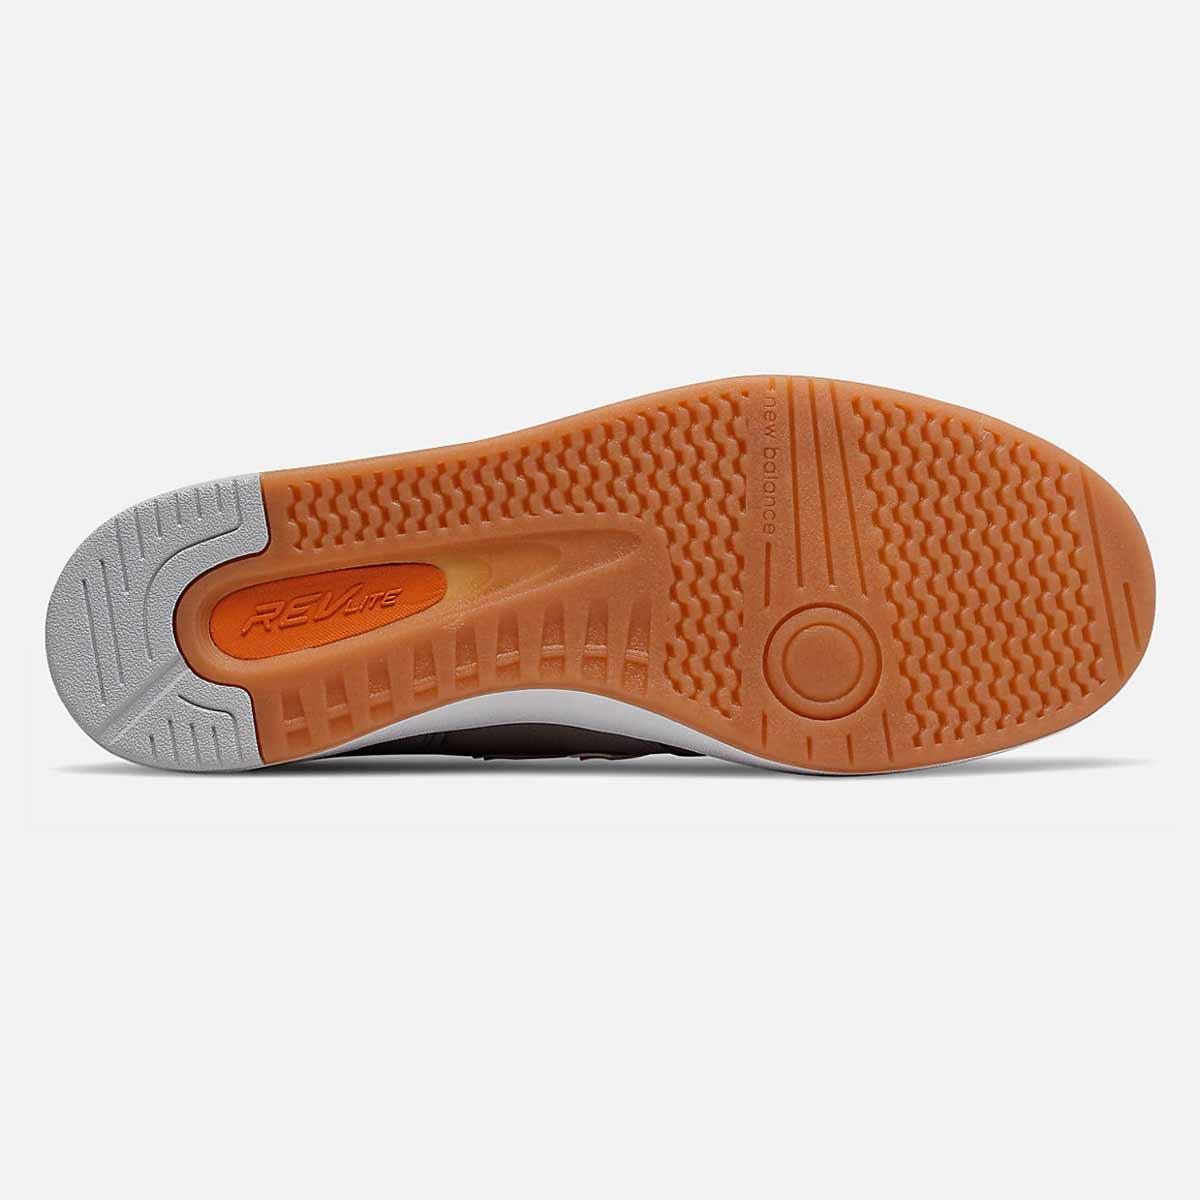 New Balance All Coast 574 Skate Shoes, Grey/Orange